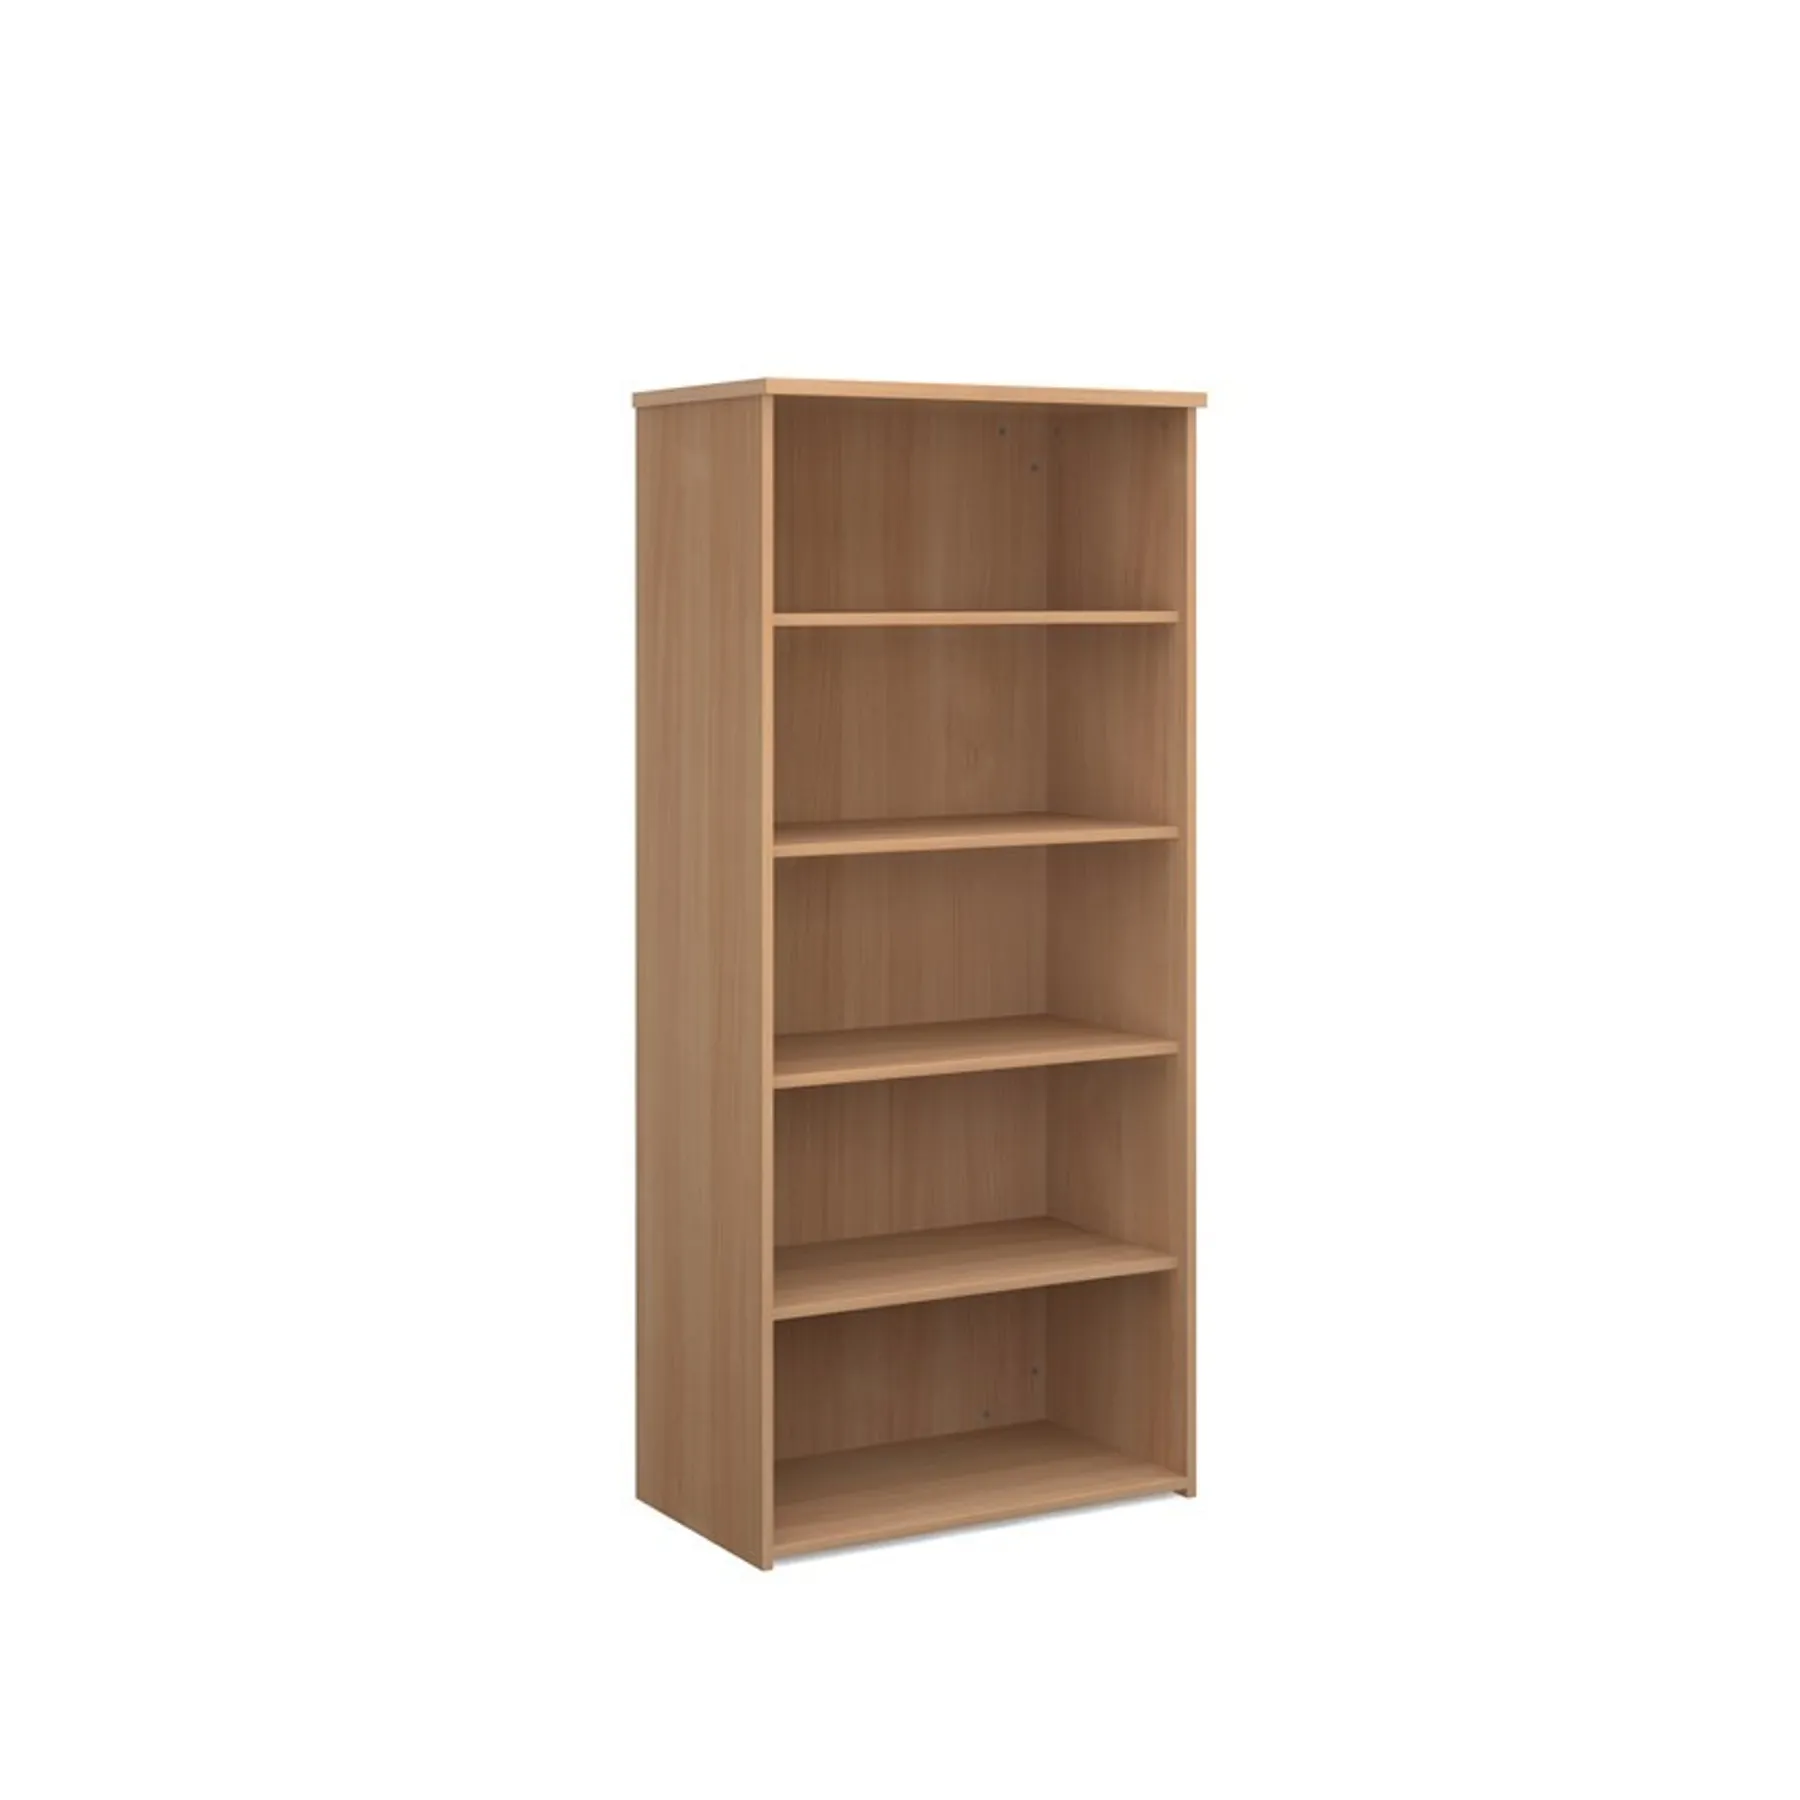 L Of 4 shelf bookcase beech